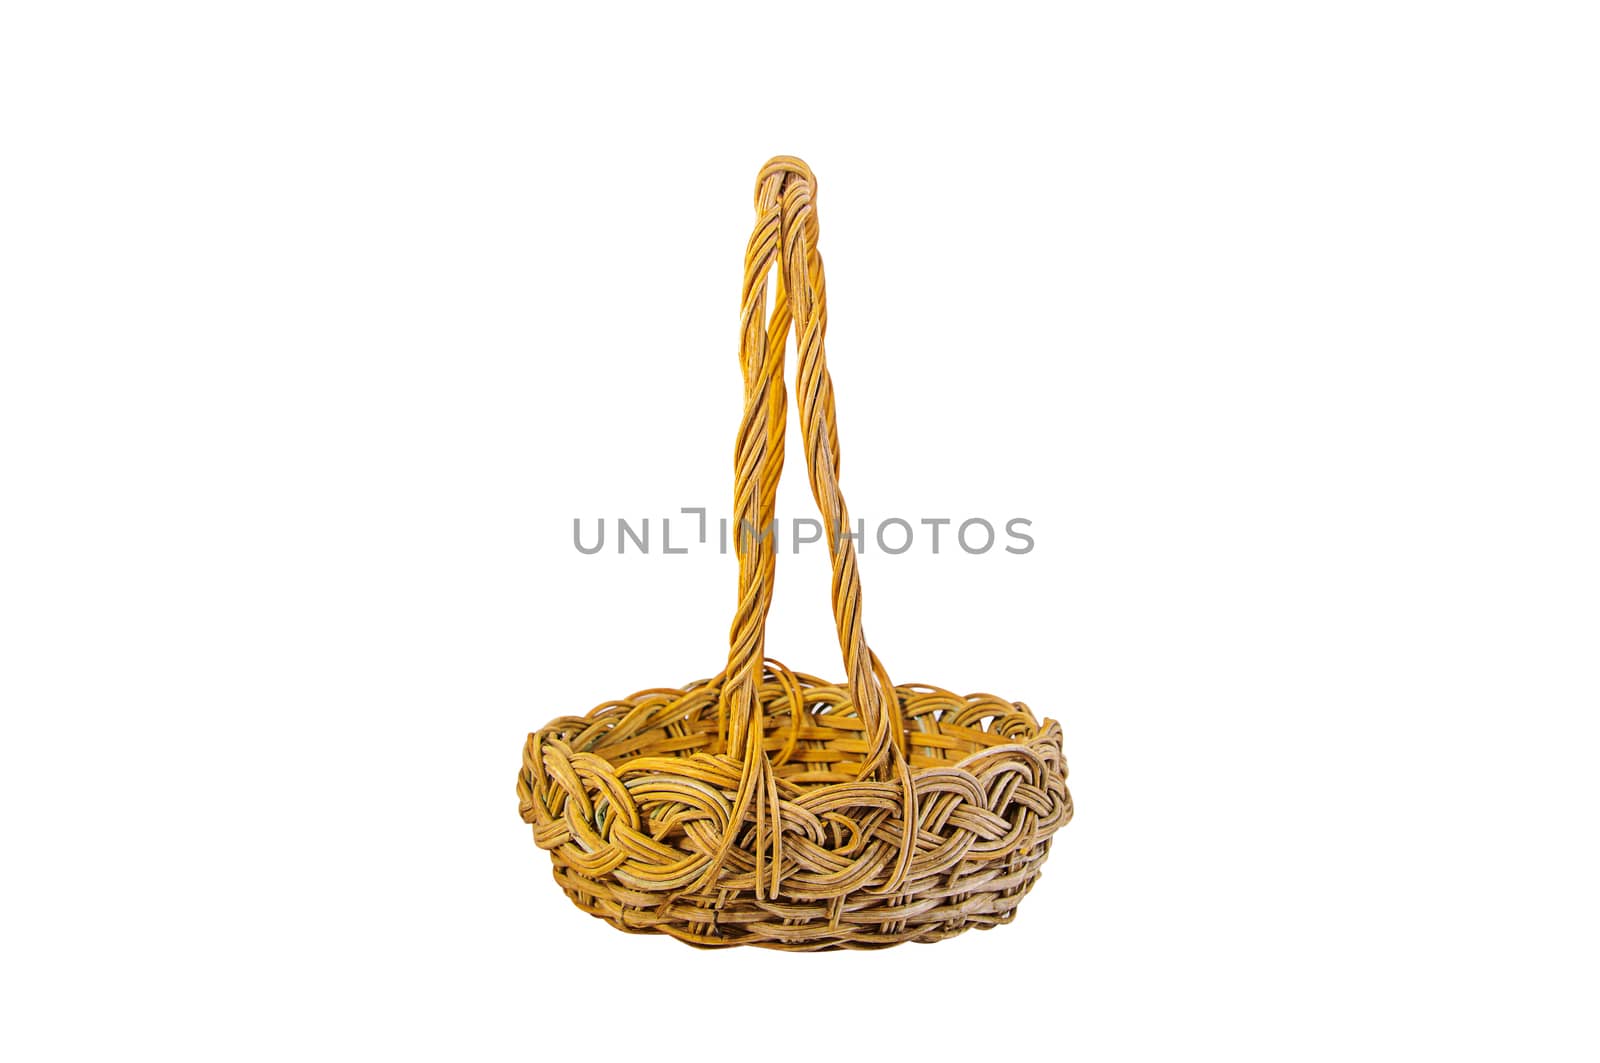 Empty wicker basket isolated on white background